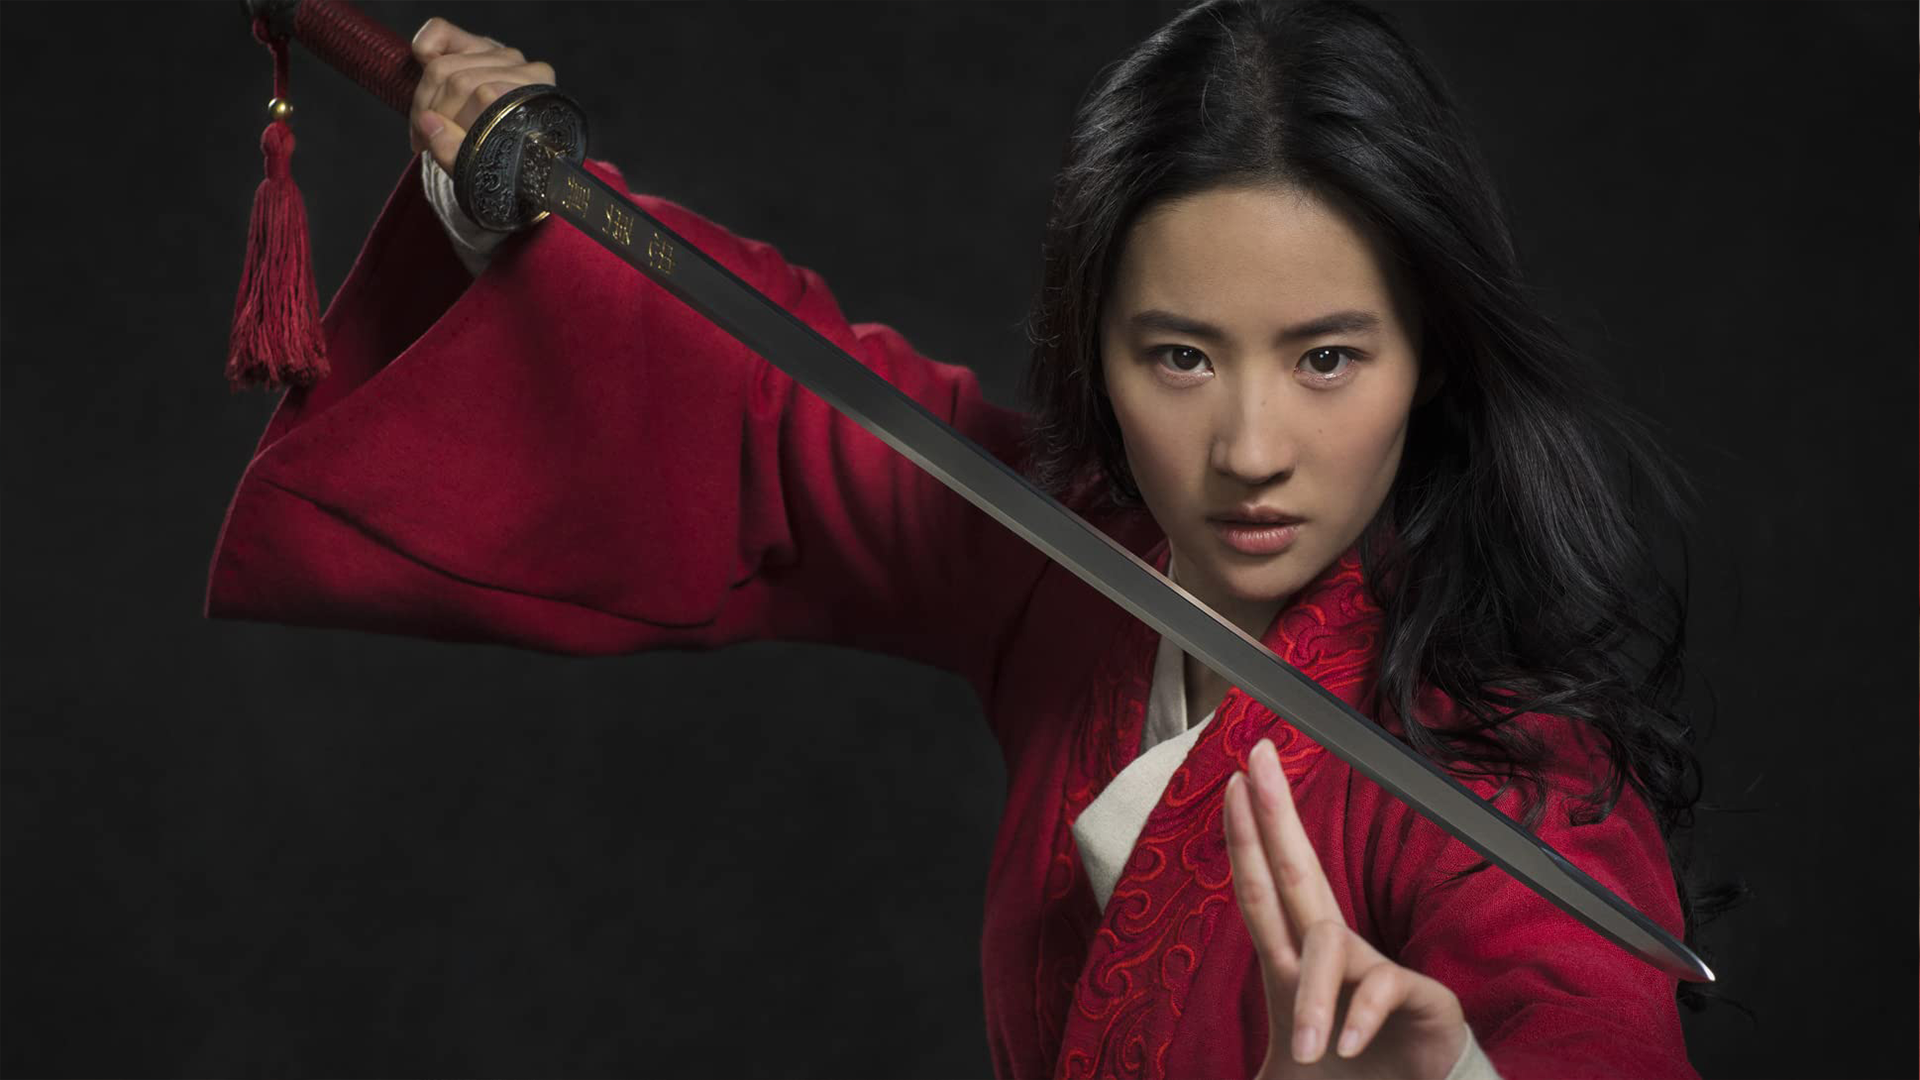 Mulan drawing her sword